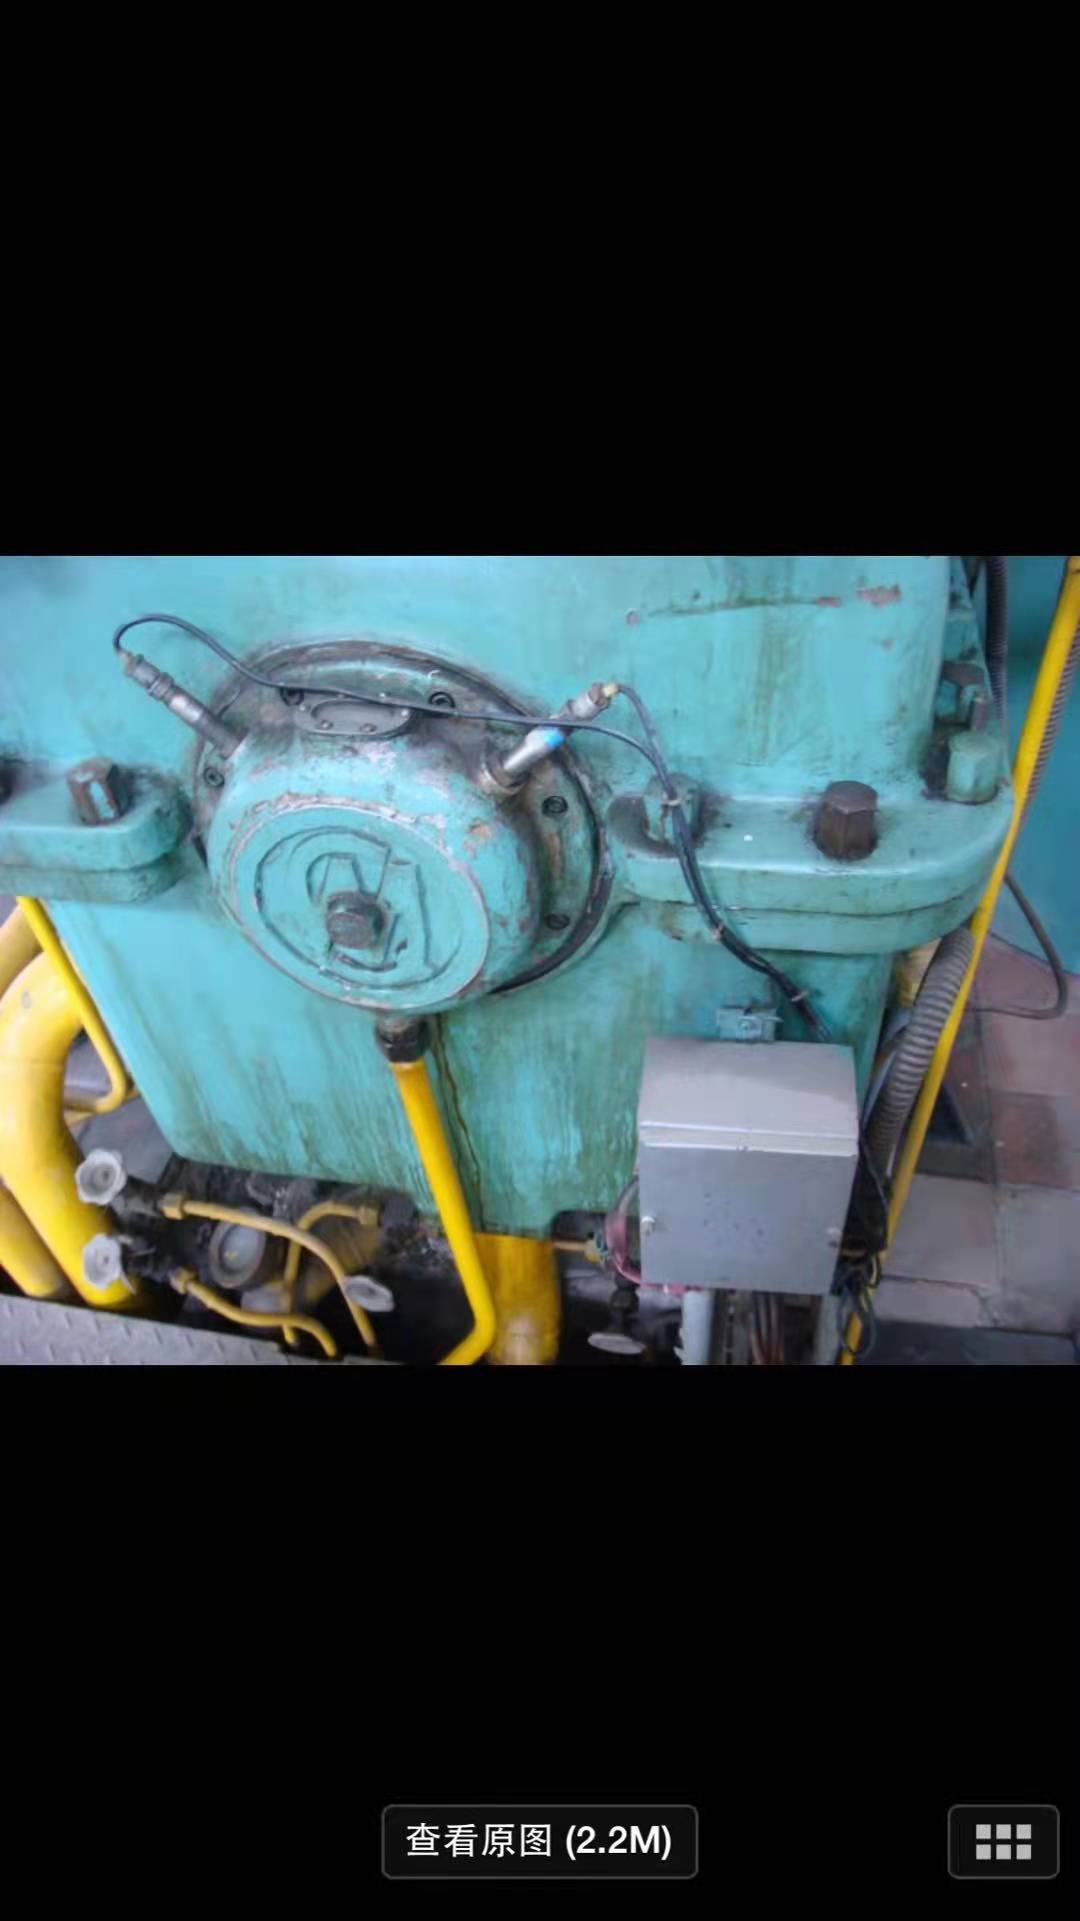 PG6561B gas turbine generator set